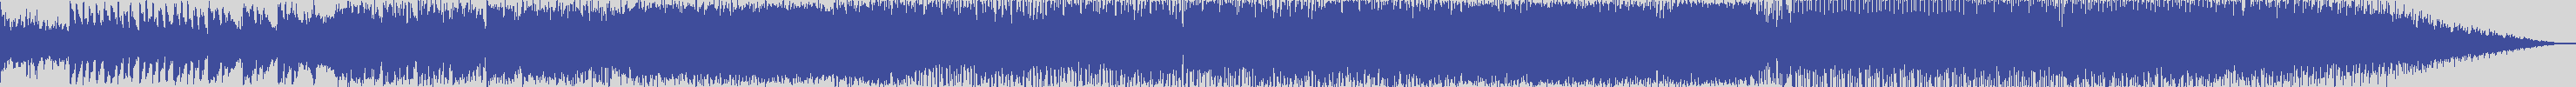 vitti_records [VIT011] Aware Project - Lupus [Original Mix] audio wave form